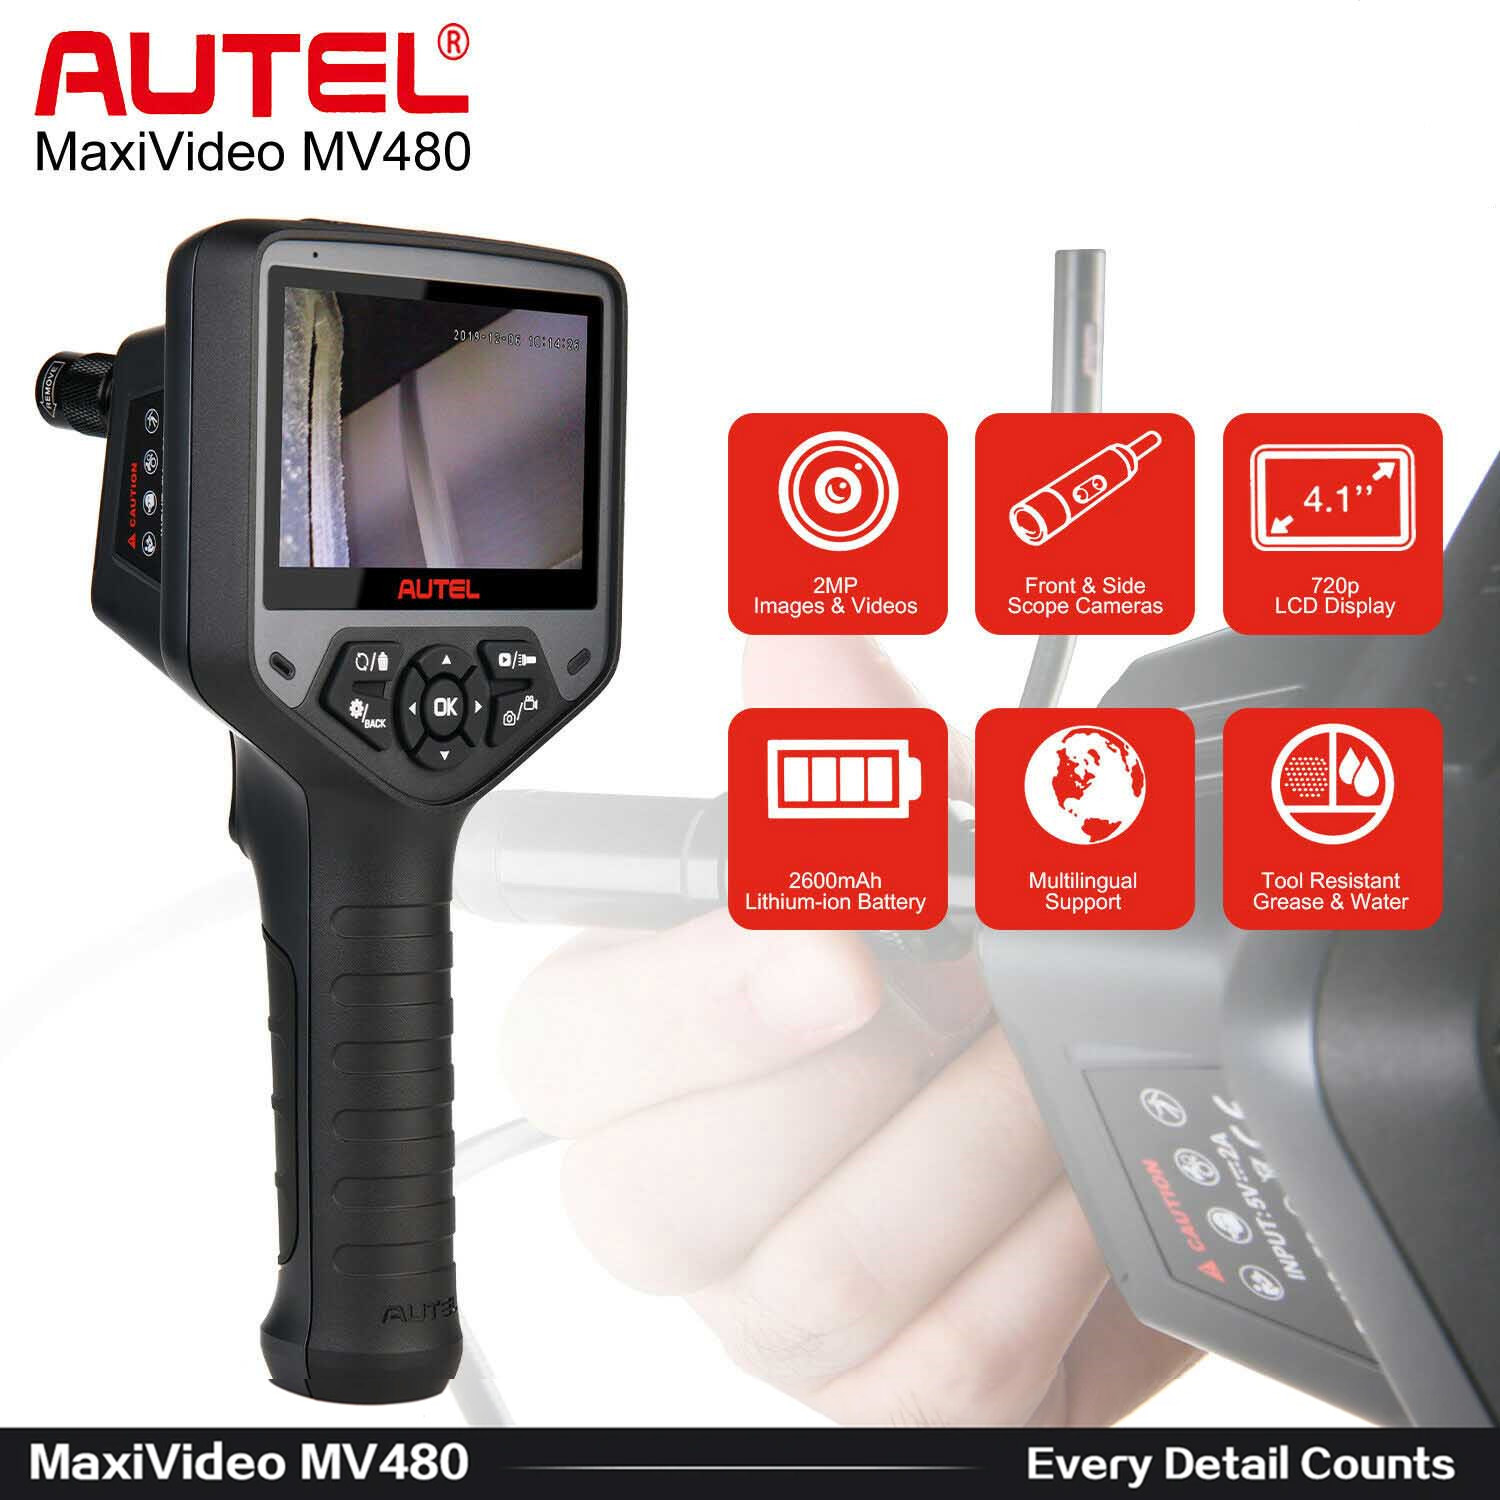 Autel-MaxiVideo-MV480-Digital-Videoscope-Unboxing-Review-1